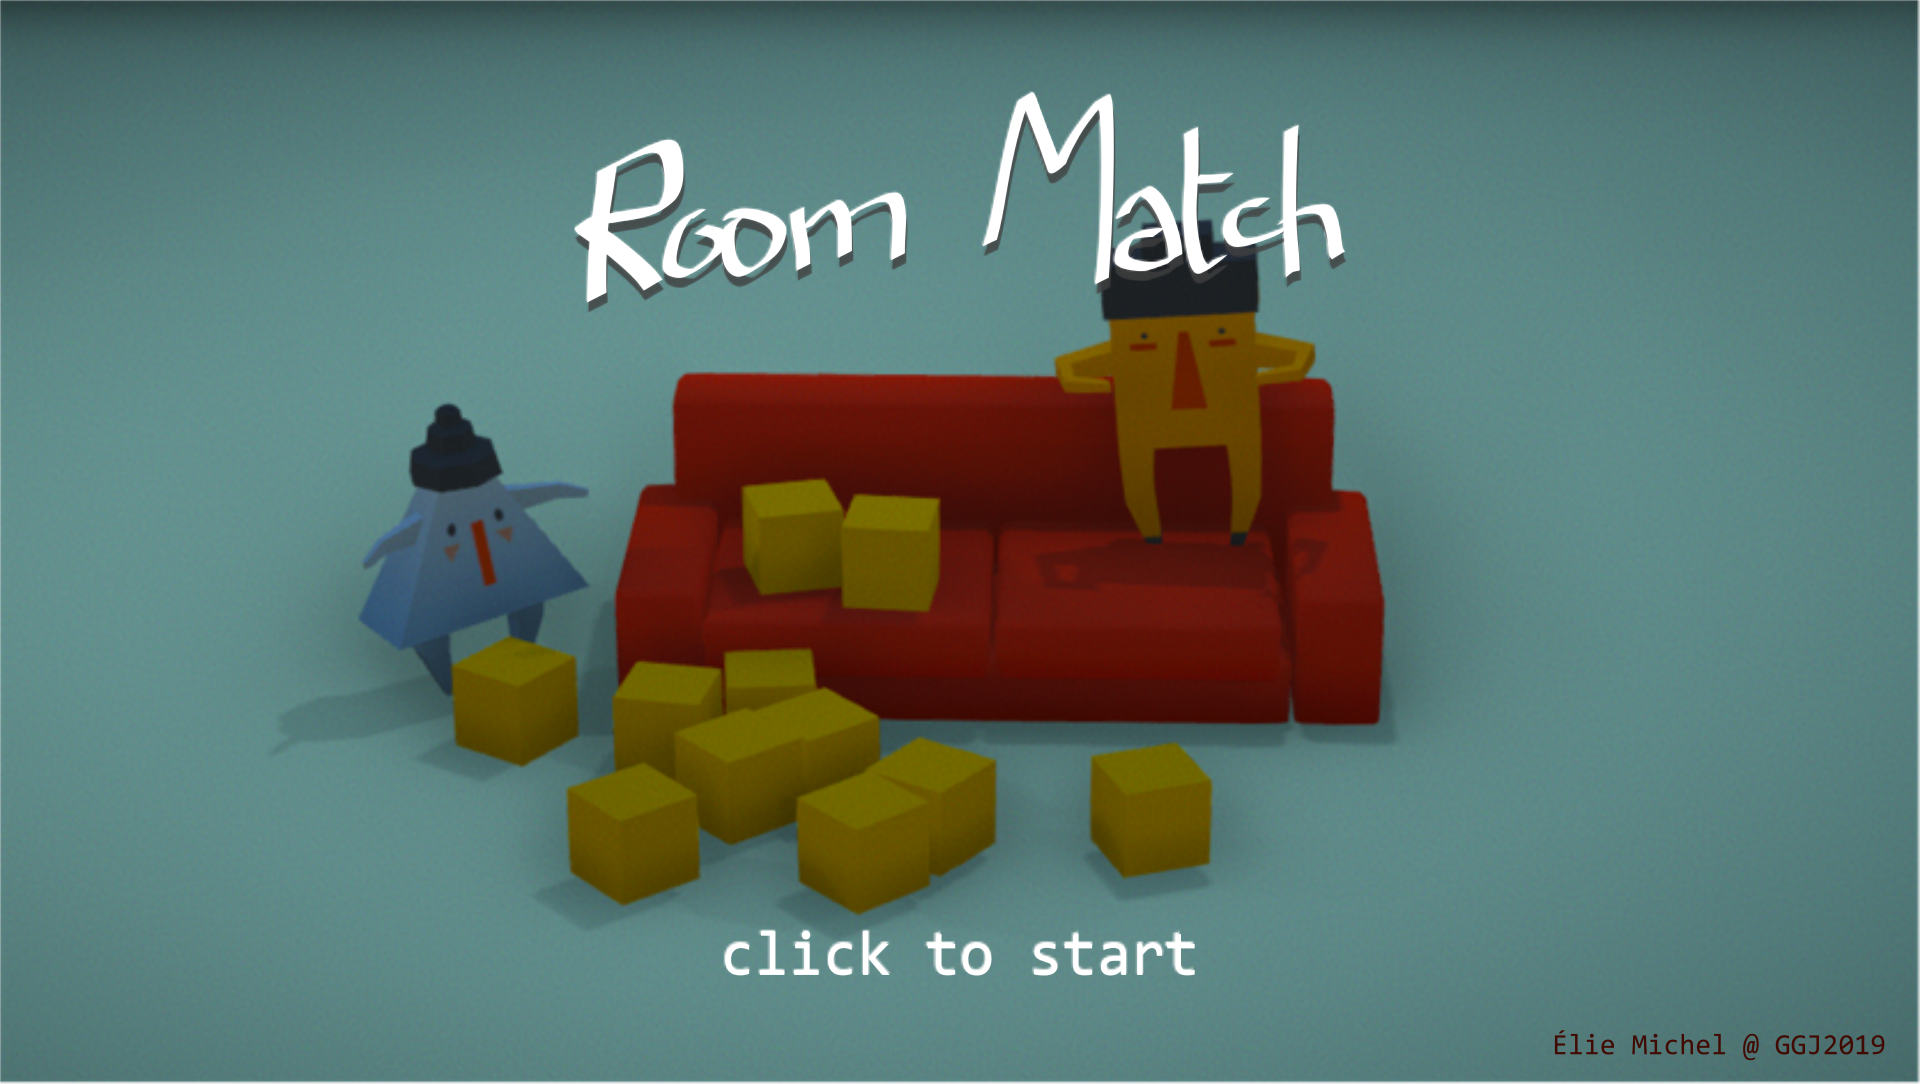 RoomMatch